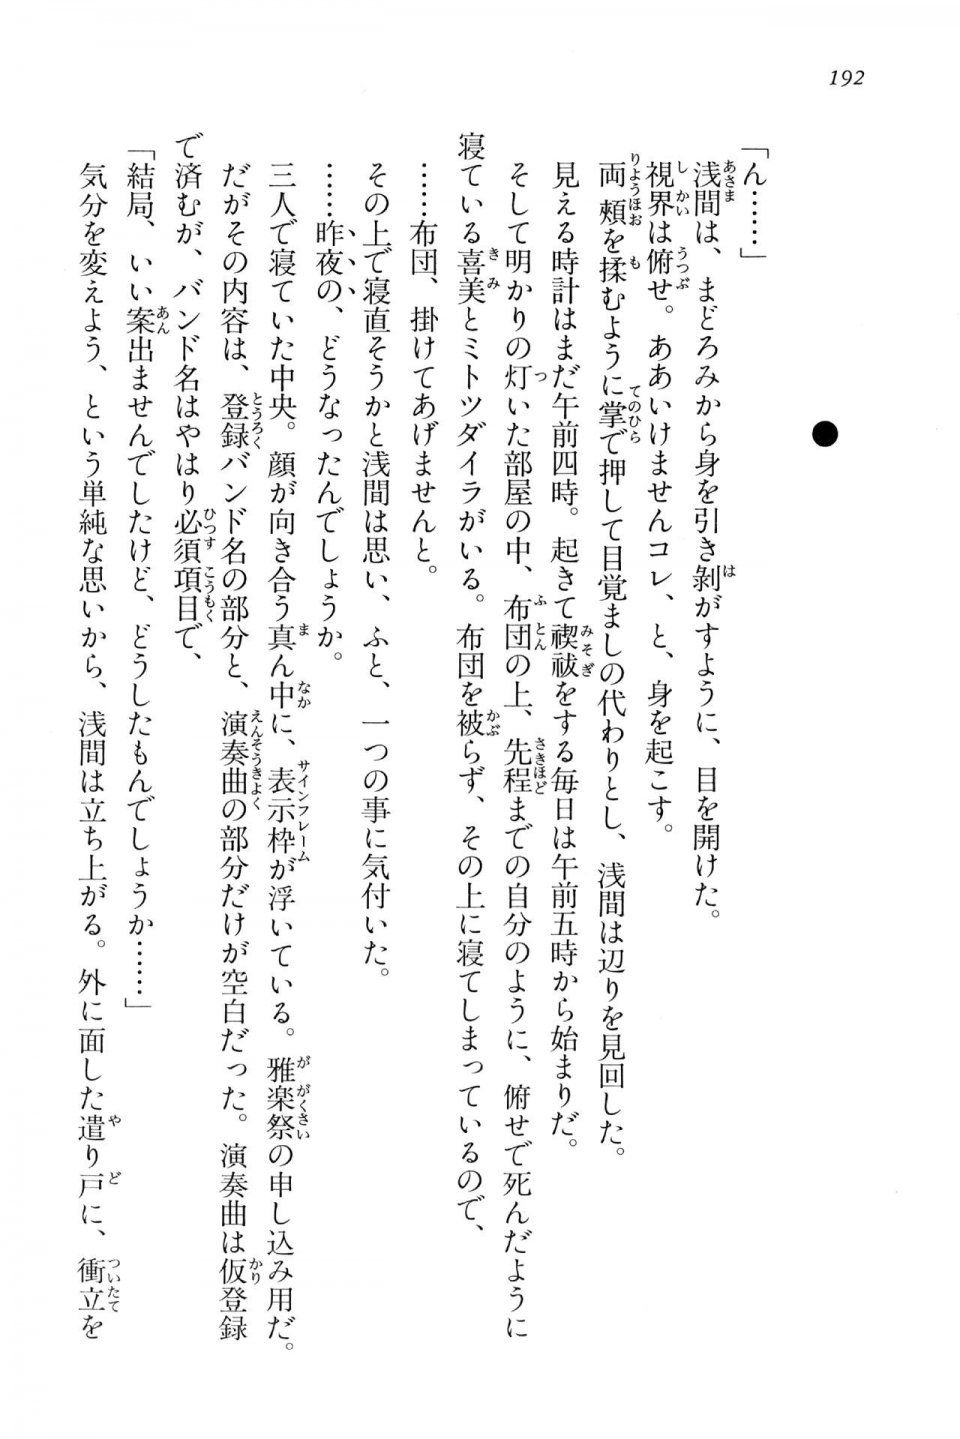 Kyoukai Senjou no Horizon BD Special Mininovel Vol 4(2B) - Photo #196